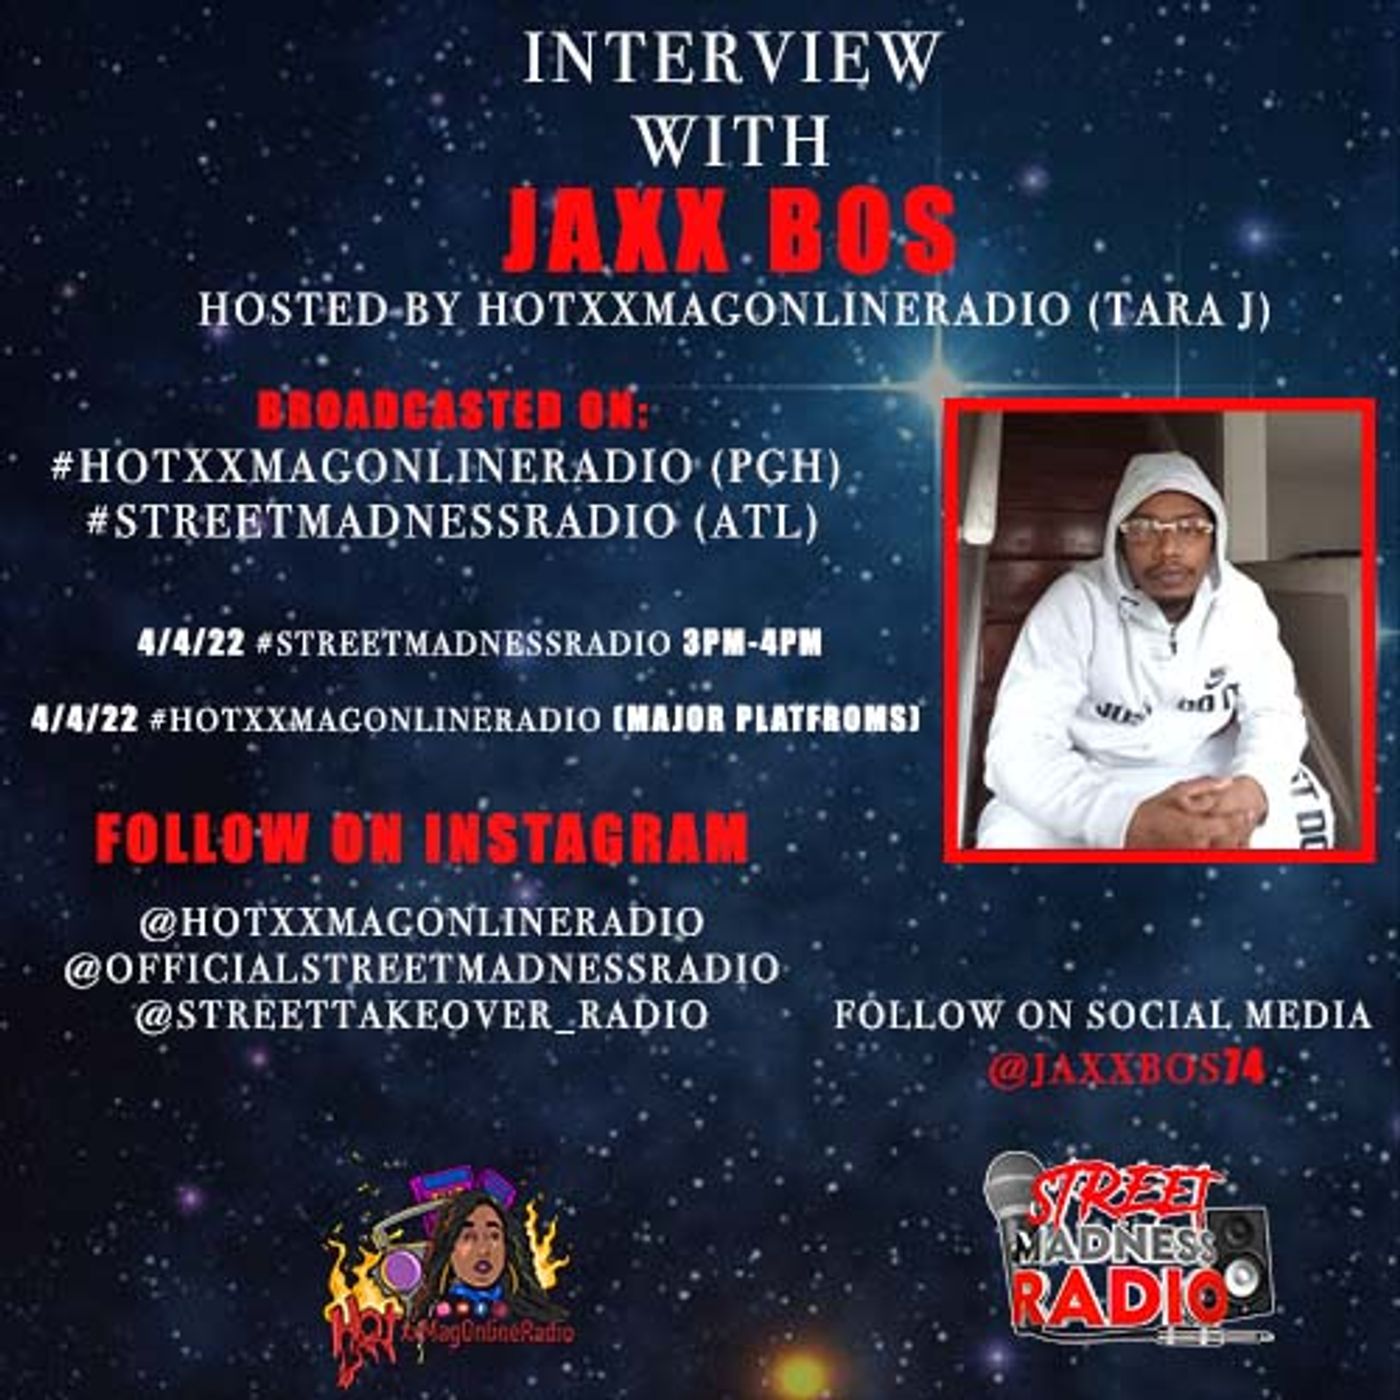 Jaxx Bos Live intevriew On HotxxMagOnlineRadio | Hosted By Tara J